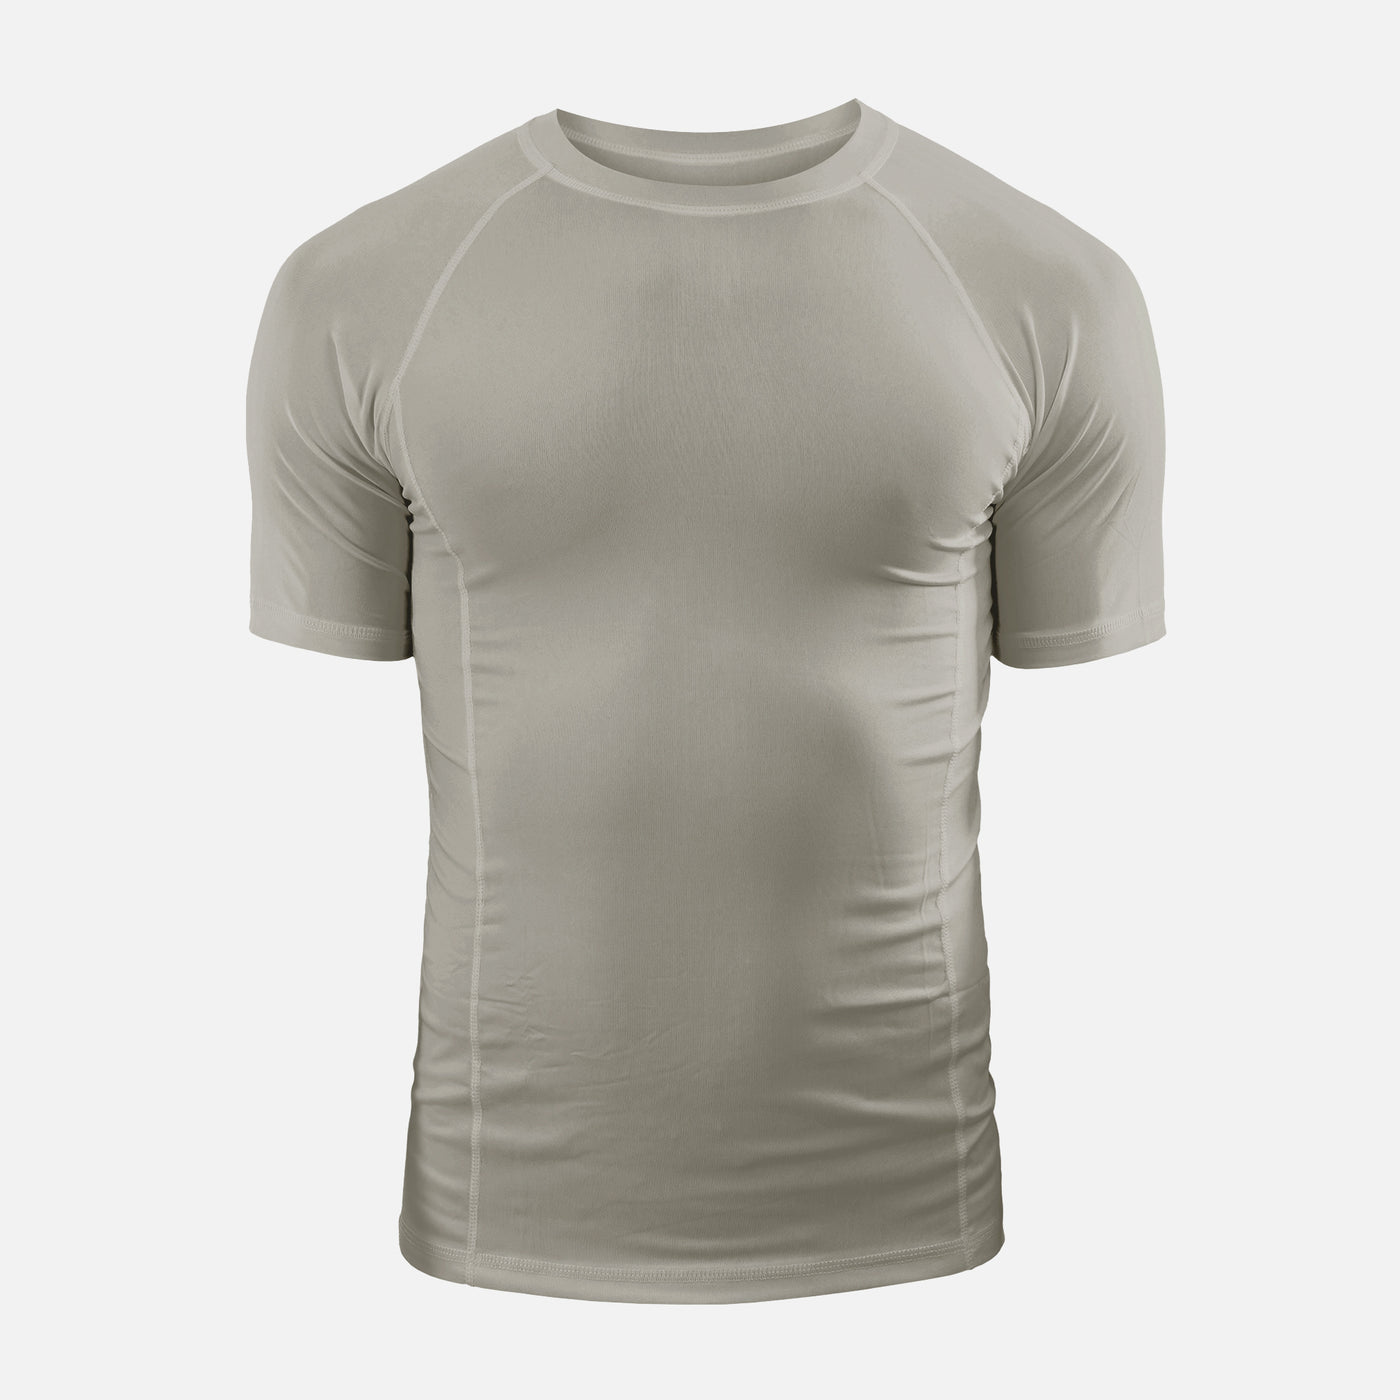 Iron Gray Compression Shirt